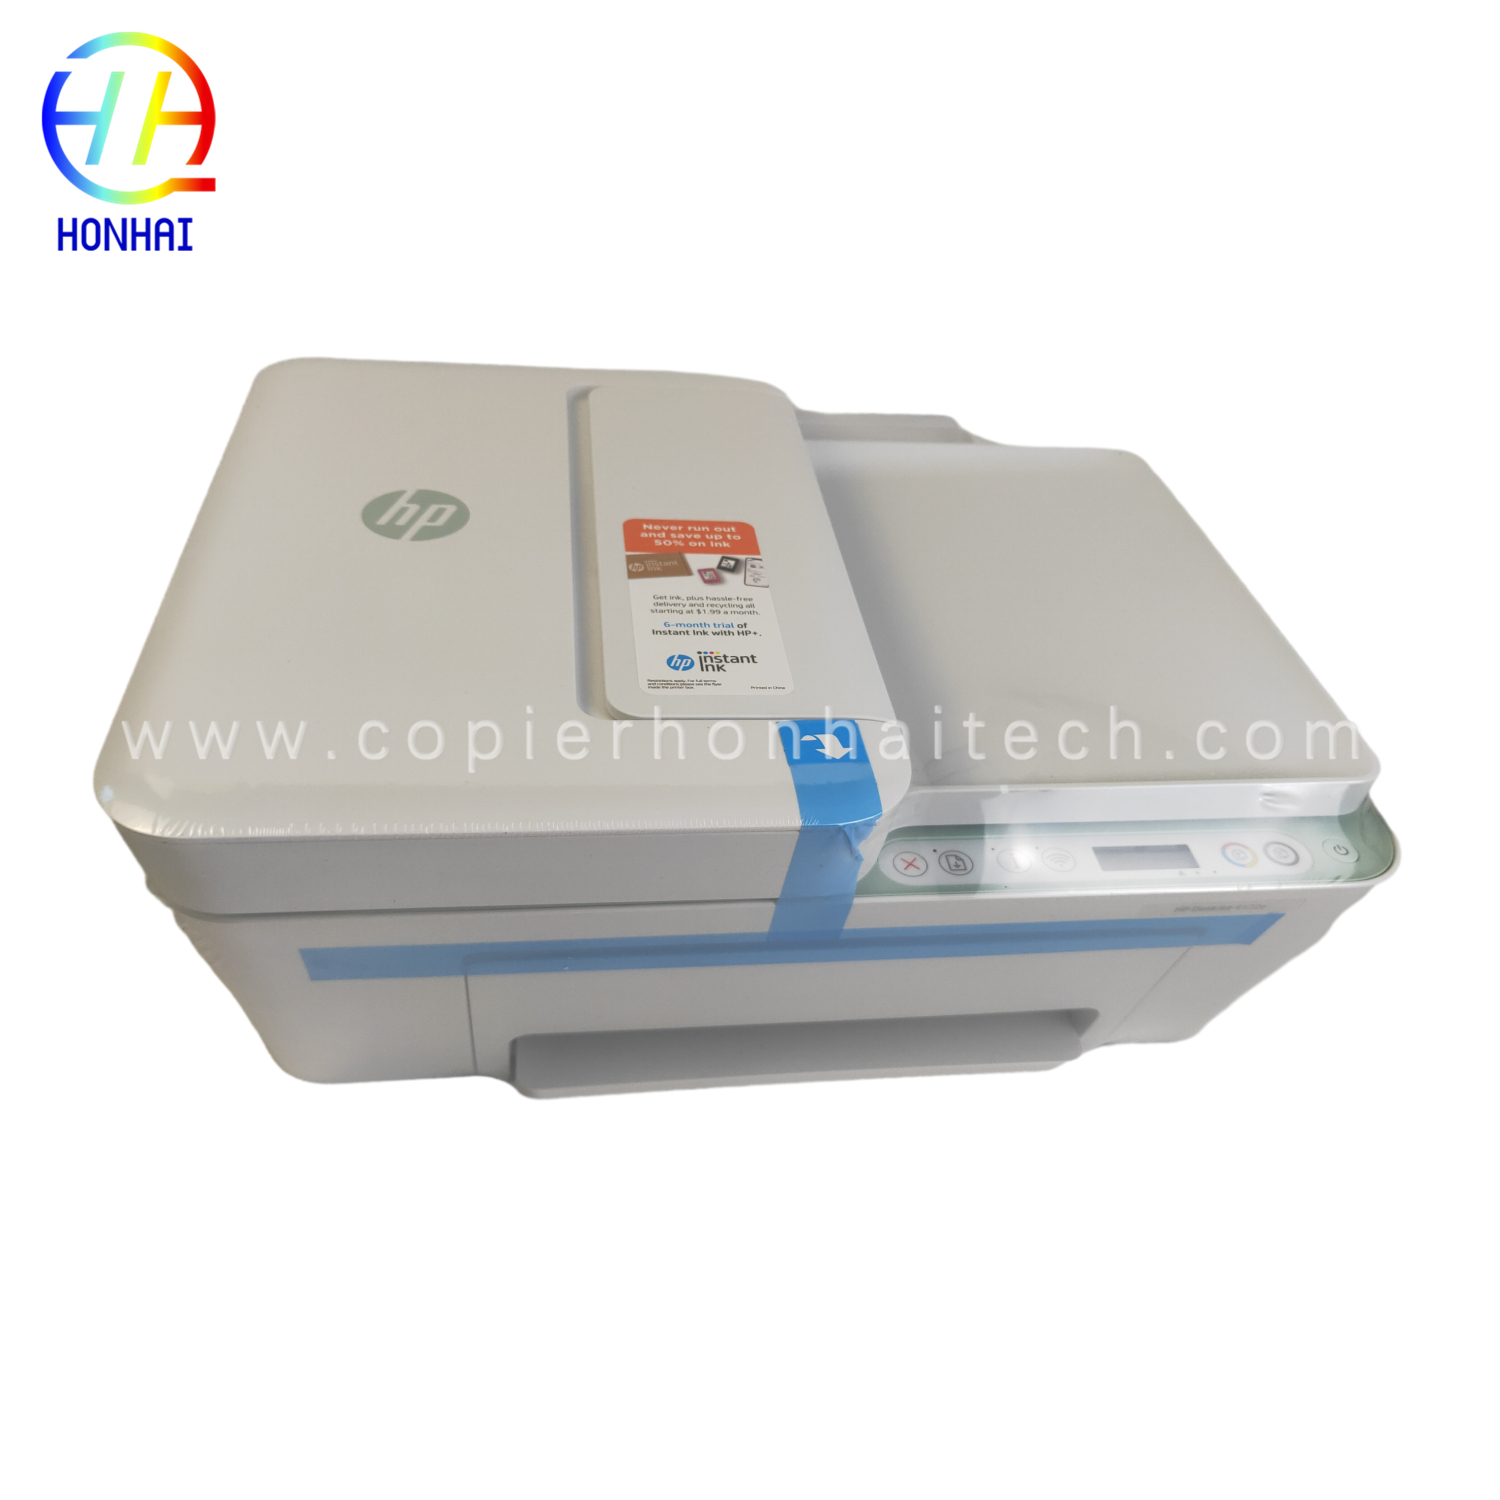 https://www.copierhonhaitech.com/original-new-wireless-printer-for-hp-deskjet-4122e-all-in-one-printer-scan-and-copy-home-office-students-and-home- ପ୍ରିଣ୍ଟର୍ -26q96a- ଉତ୍ପାଦ /